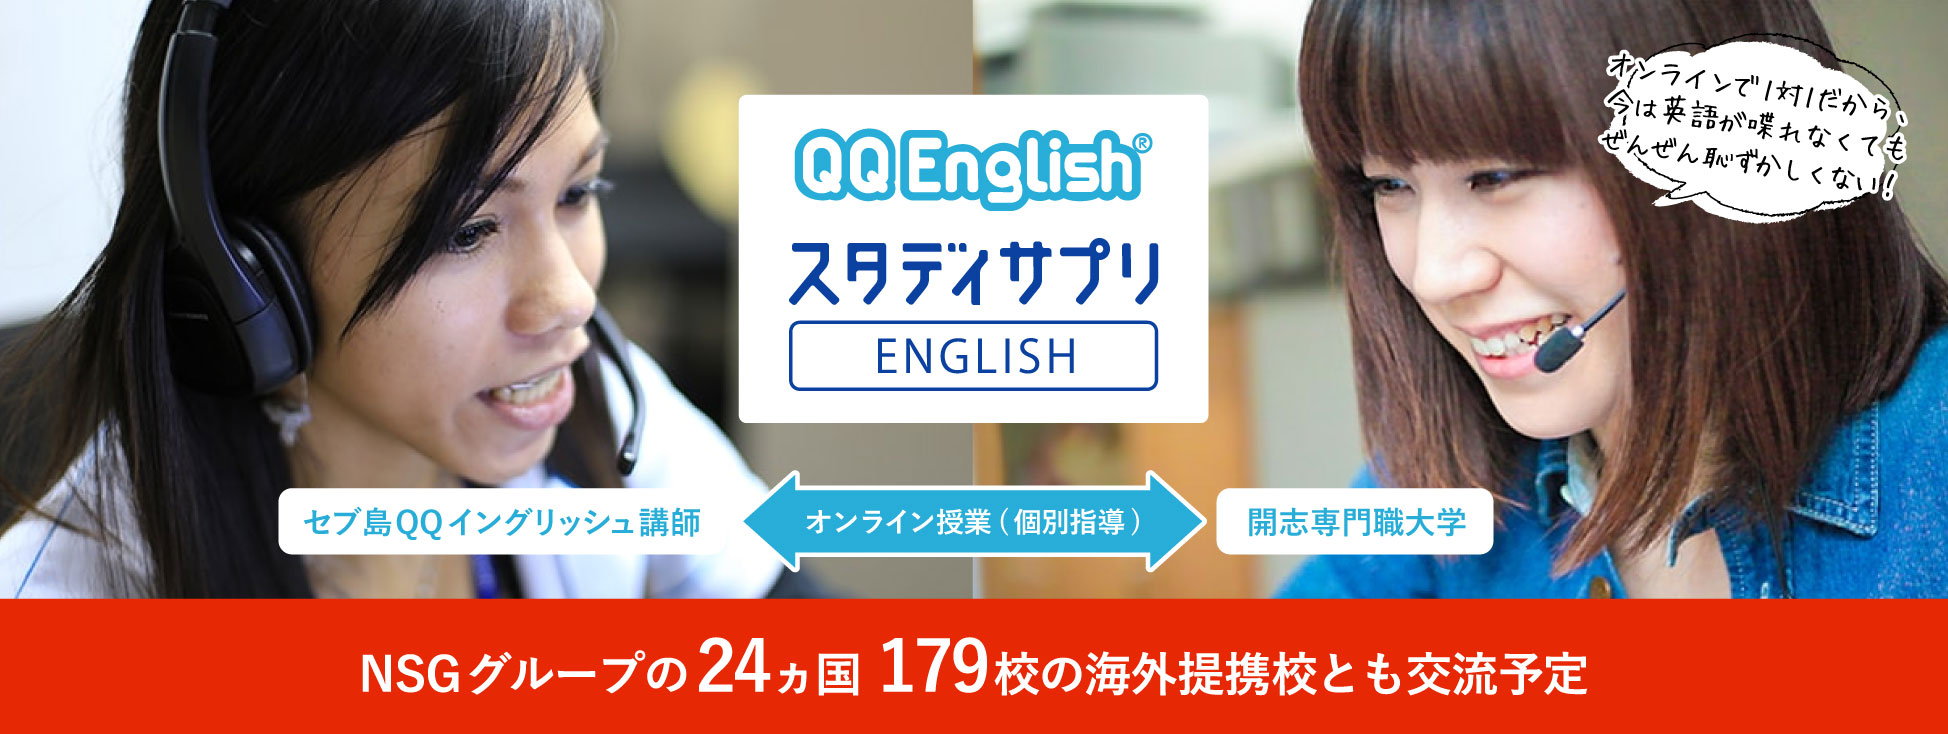 QQ English スタディサプリ ENGLISH